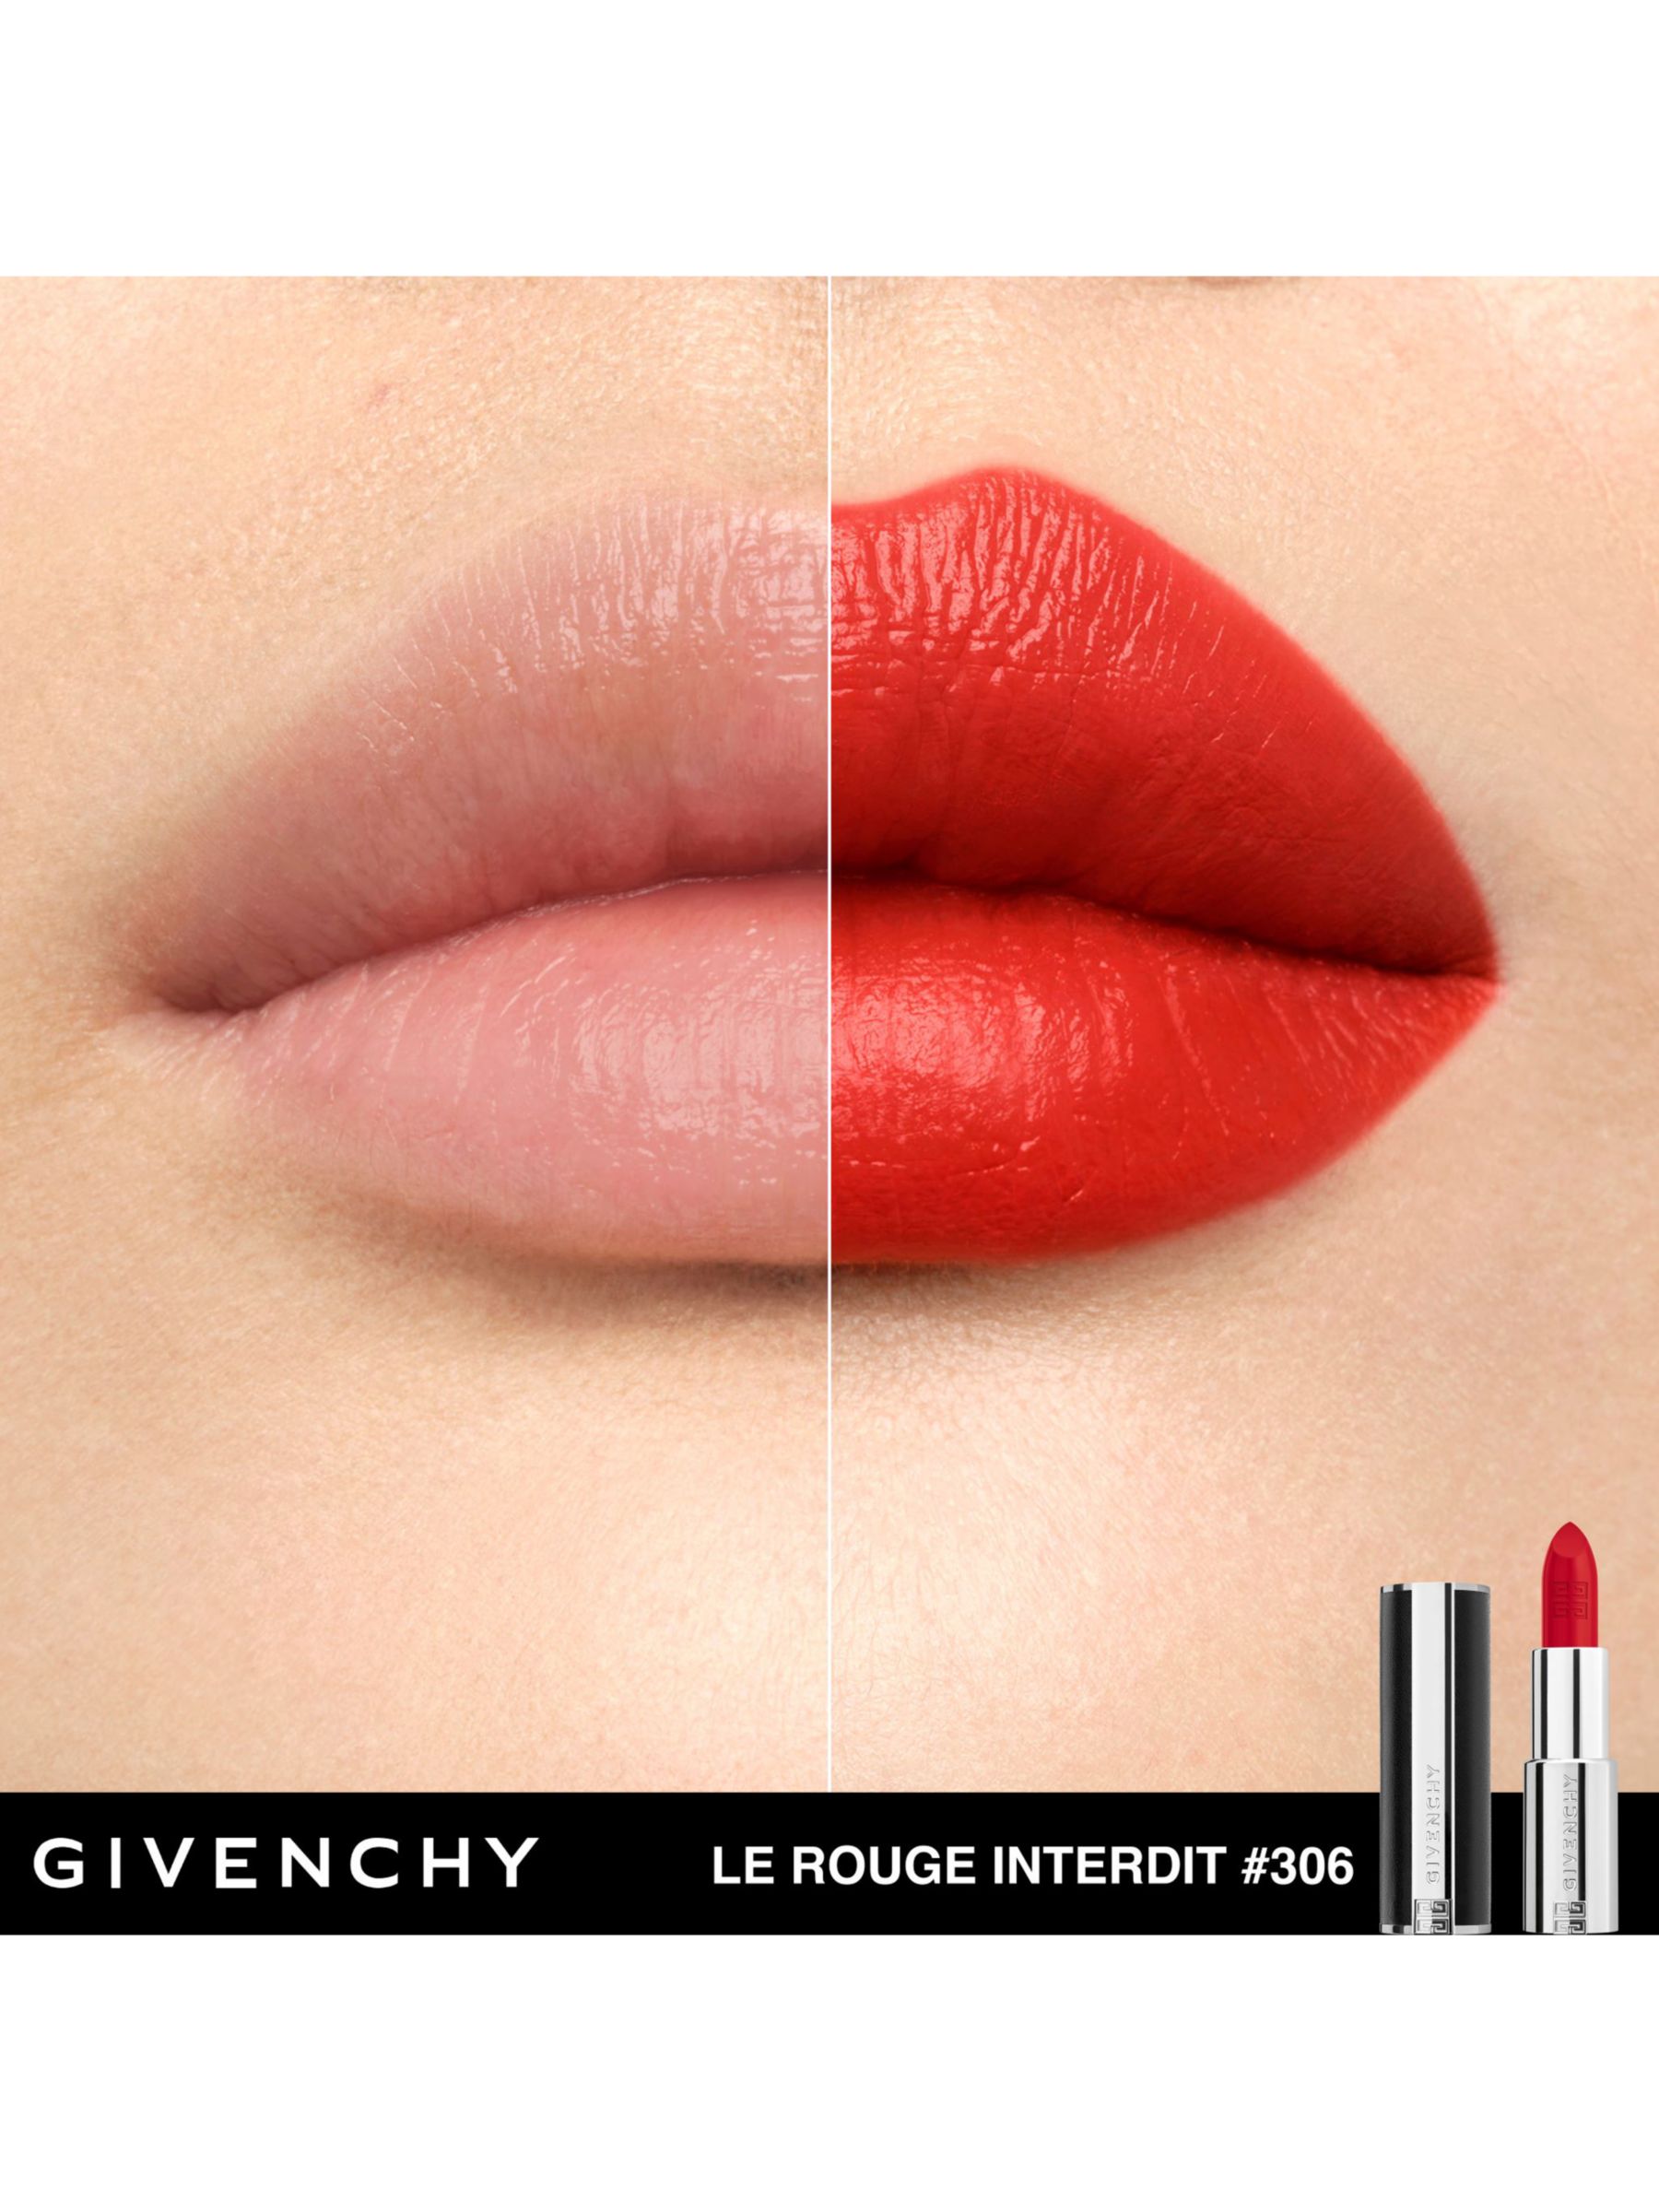 Givenchy Le Rouge Interdit Intense Silk Lipstick, N306 Carmin Escarpin at  John Lewis & Partners